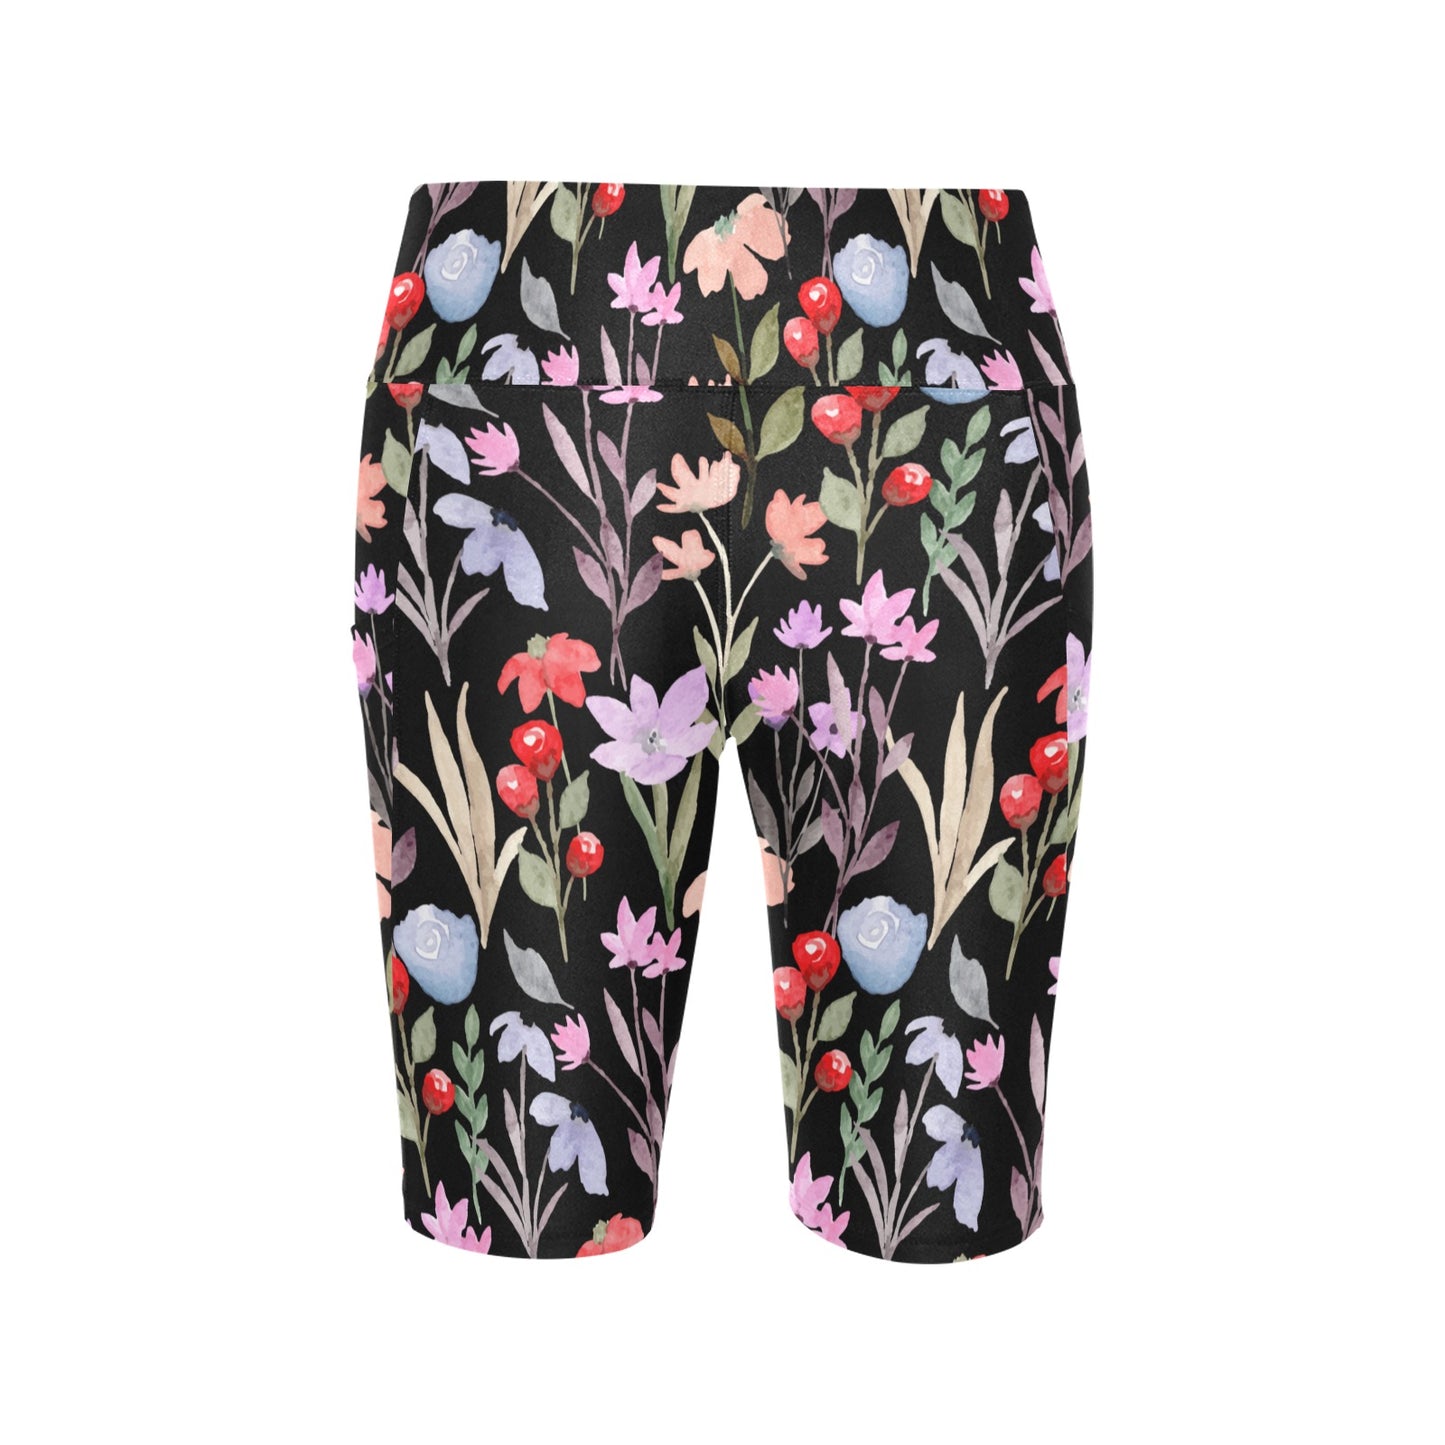 Floral Watercolour - Women's Bike Shorts Womens Bike Shorts